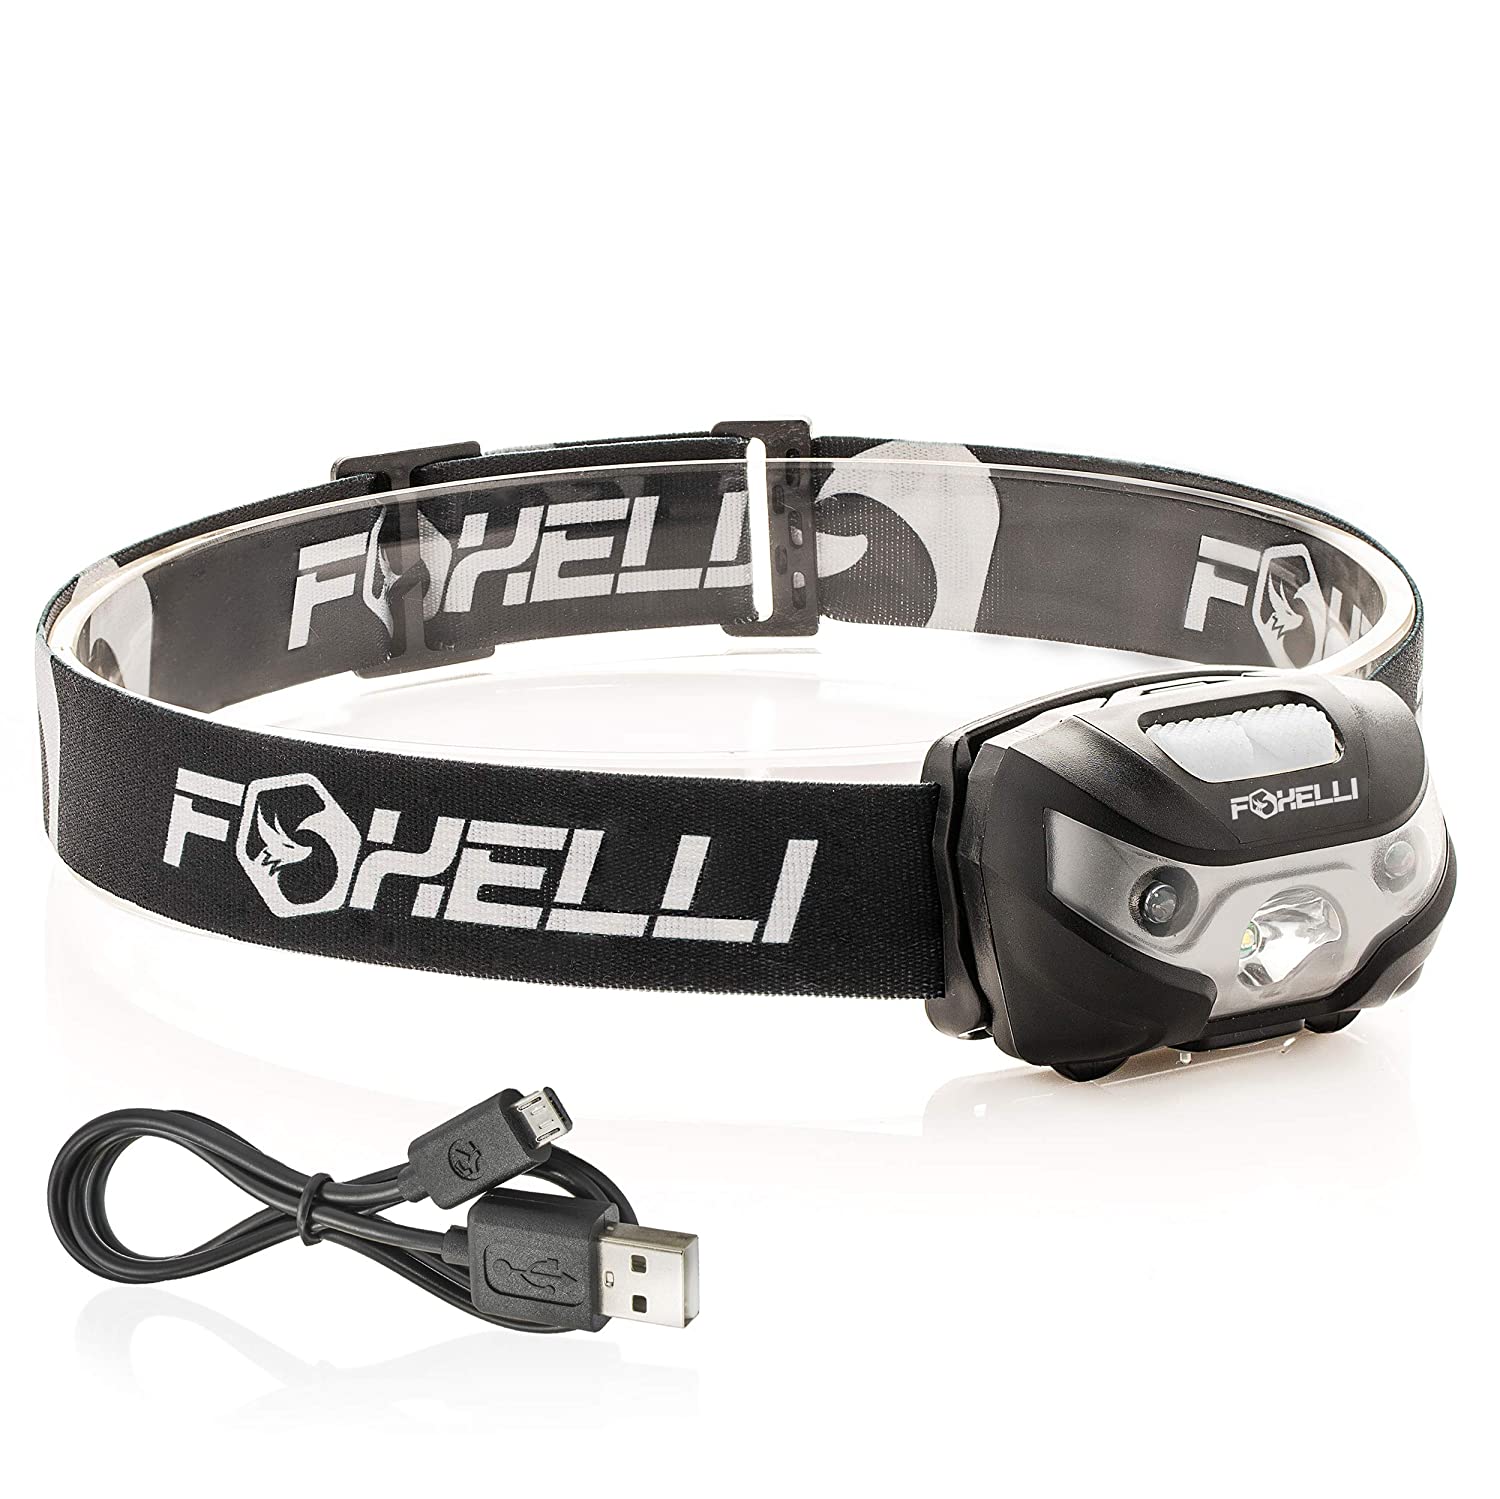 Foxelli USB Rechargeable Headlamp Flashlight 